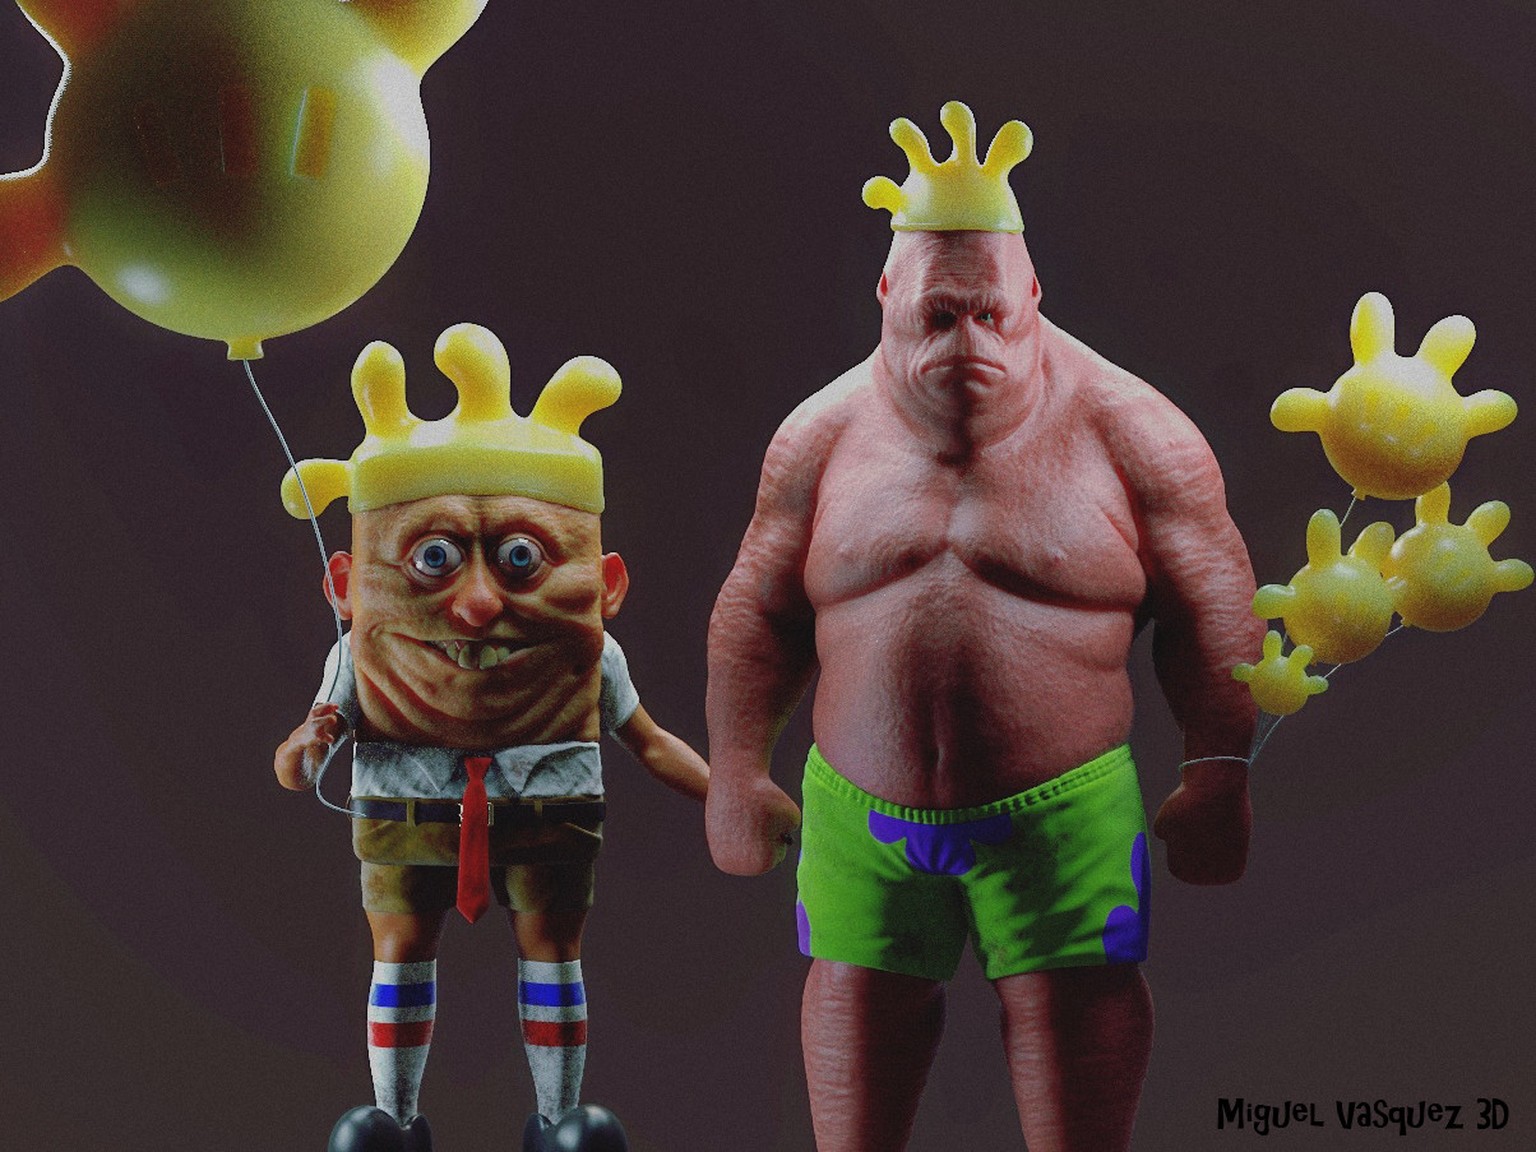 miguel vasquez spongebob squarepants patrick star humanoid realfigure 3d modelling rendering https://www.artstation.com/artwork/Nk3w5